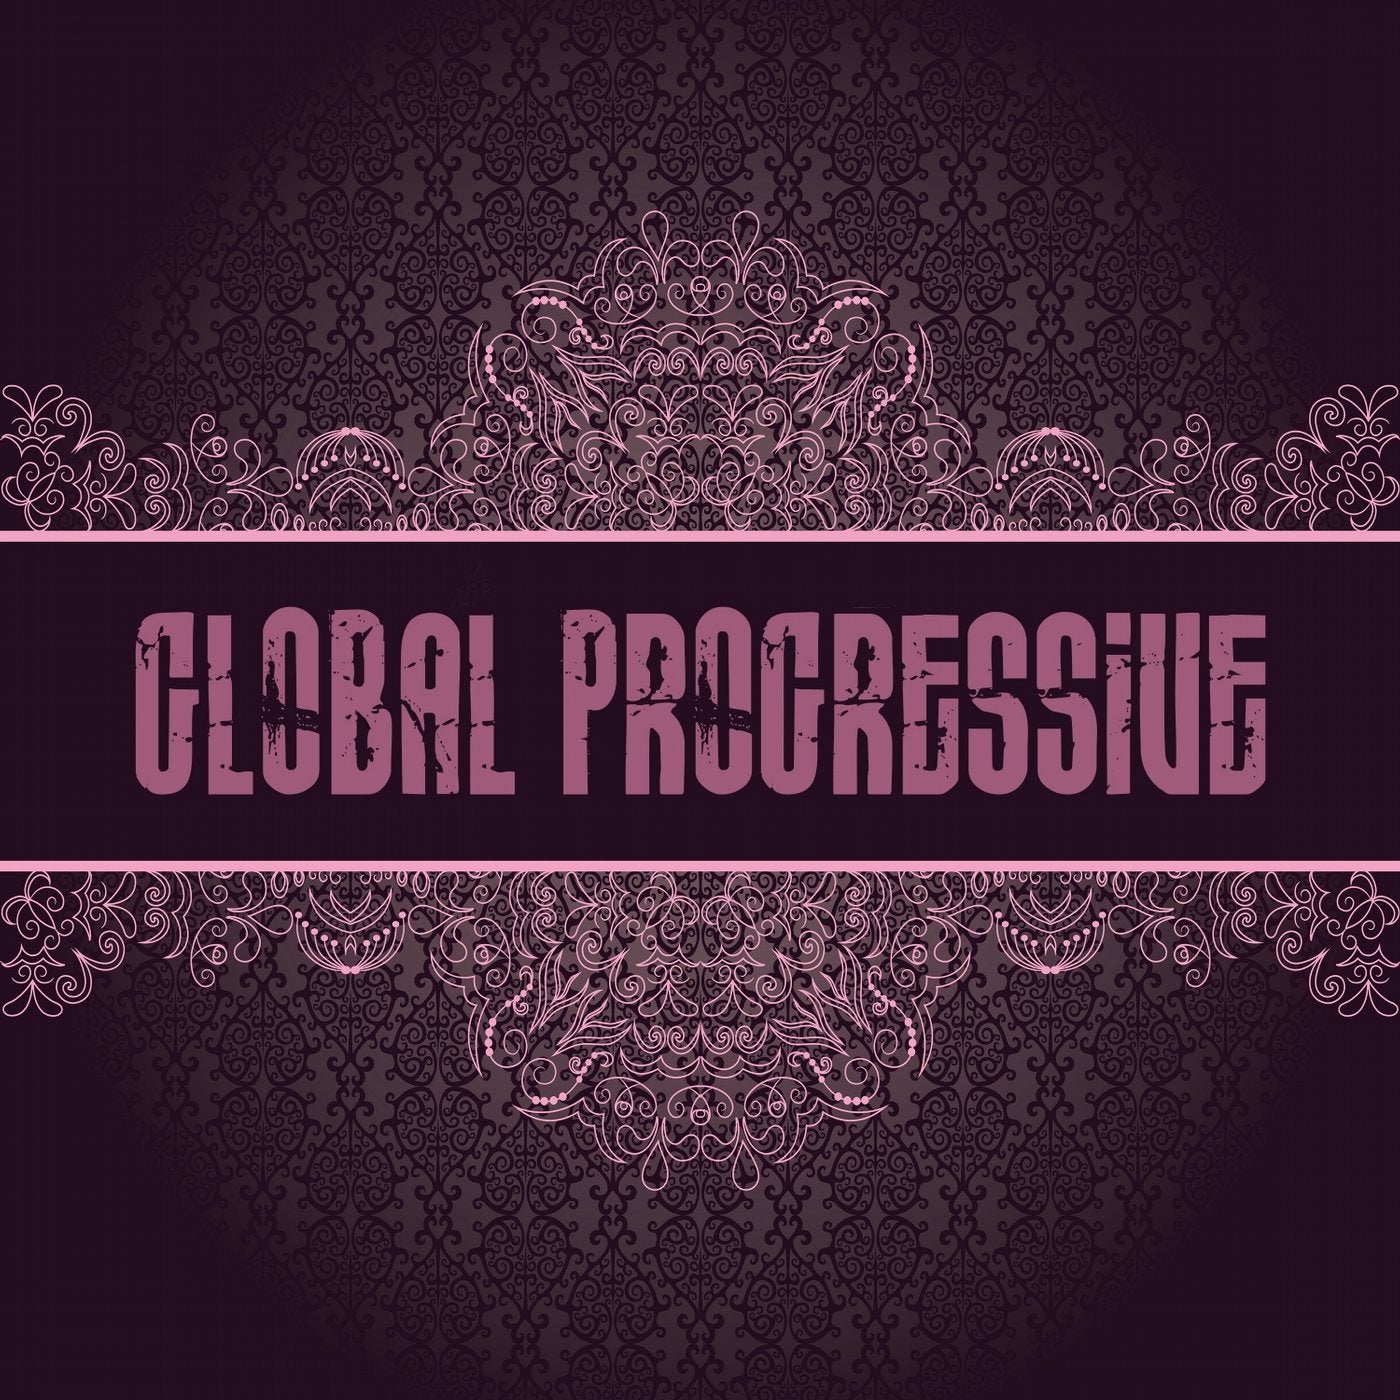 Global Progressive